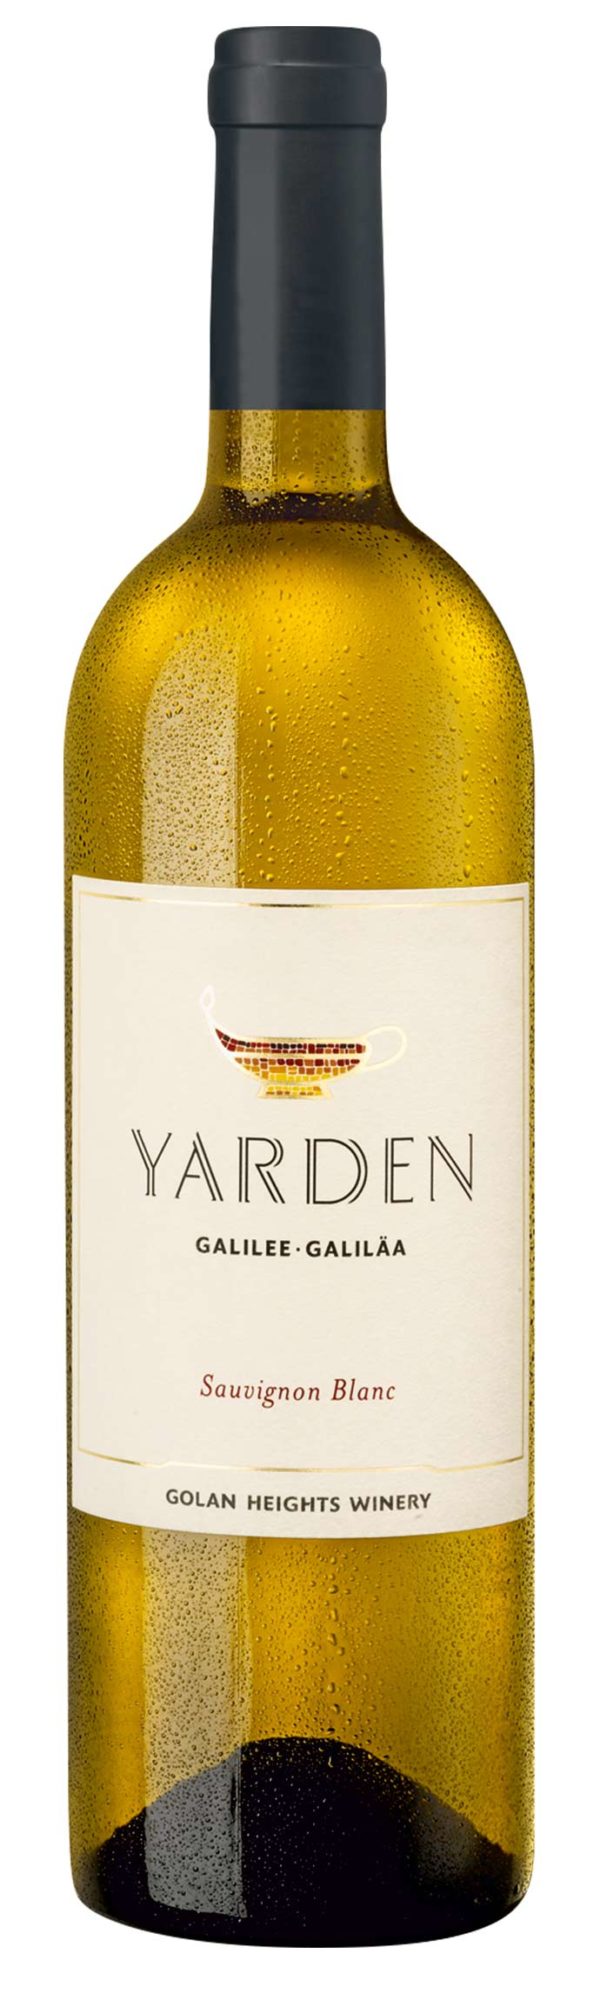 Golan Heights Winery Yarden Sauvignon Blanc 2019